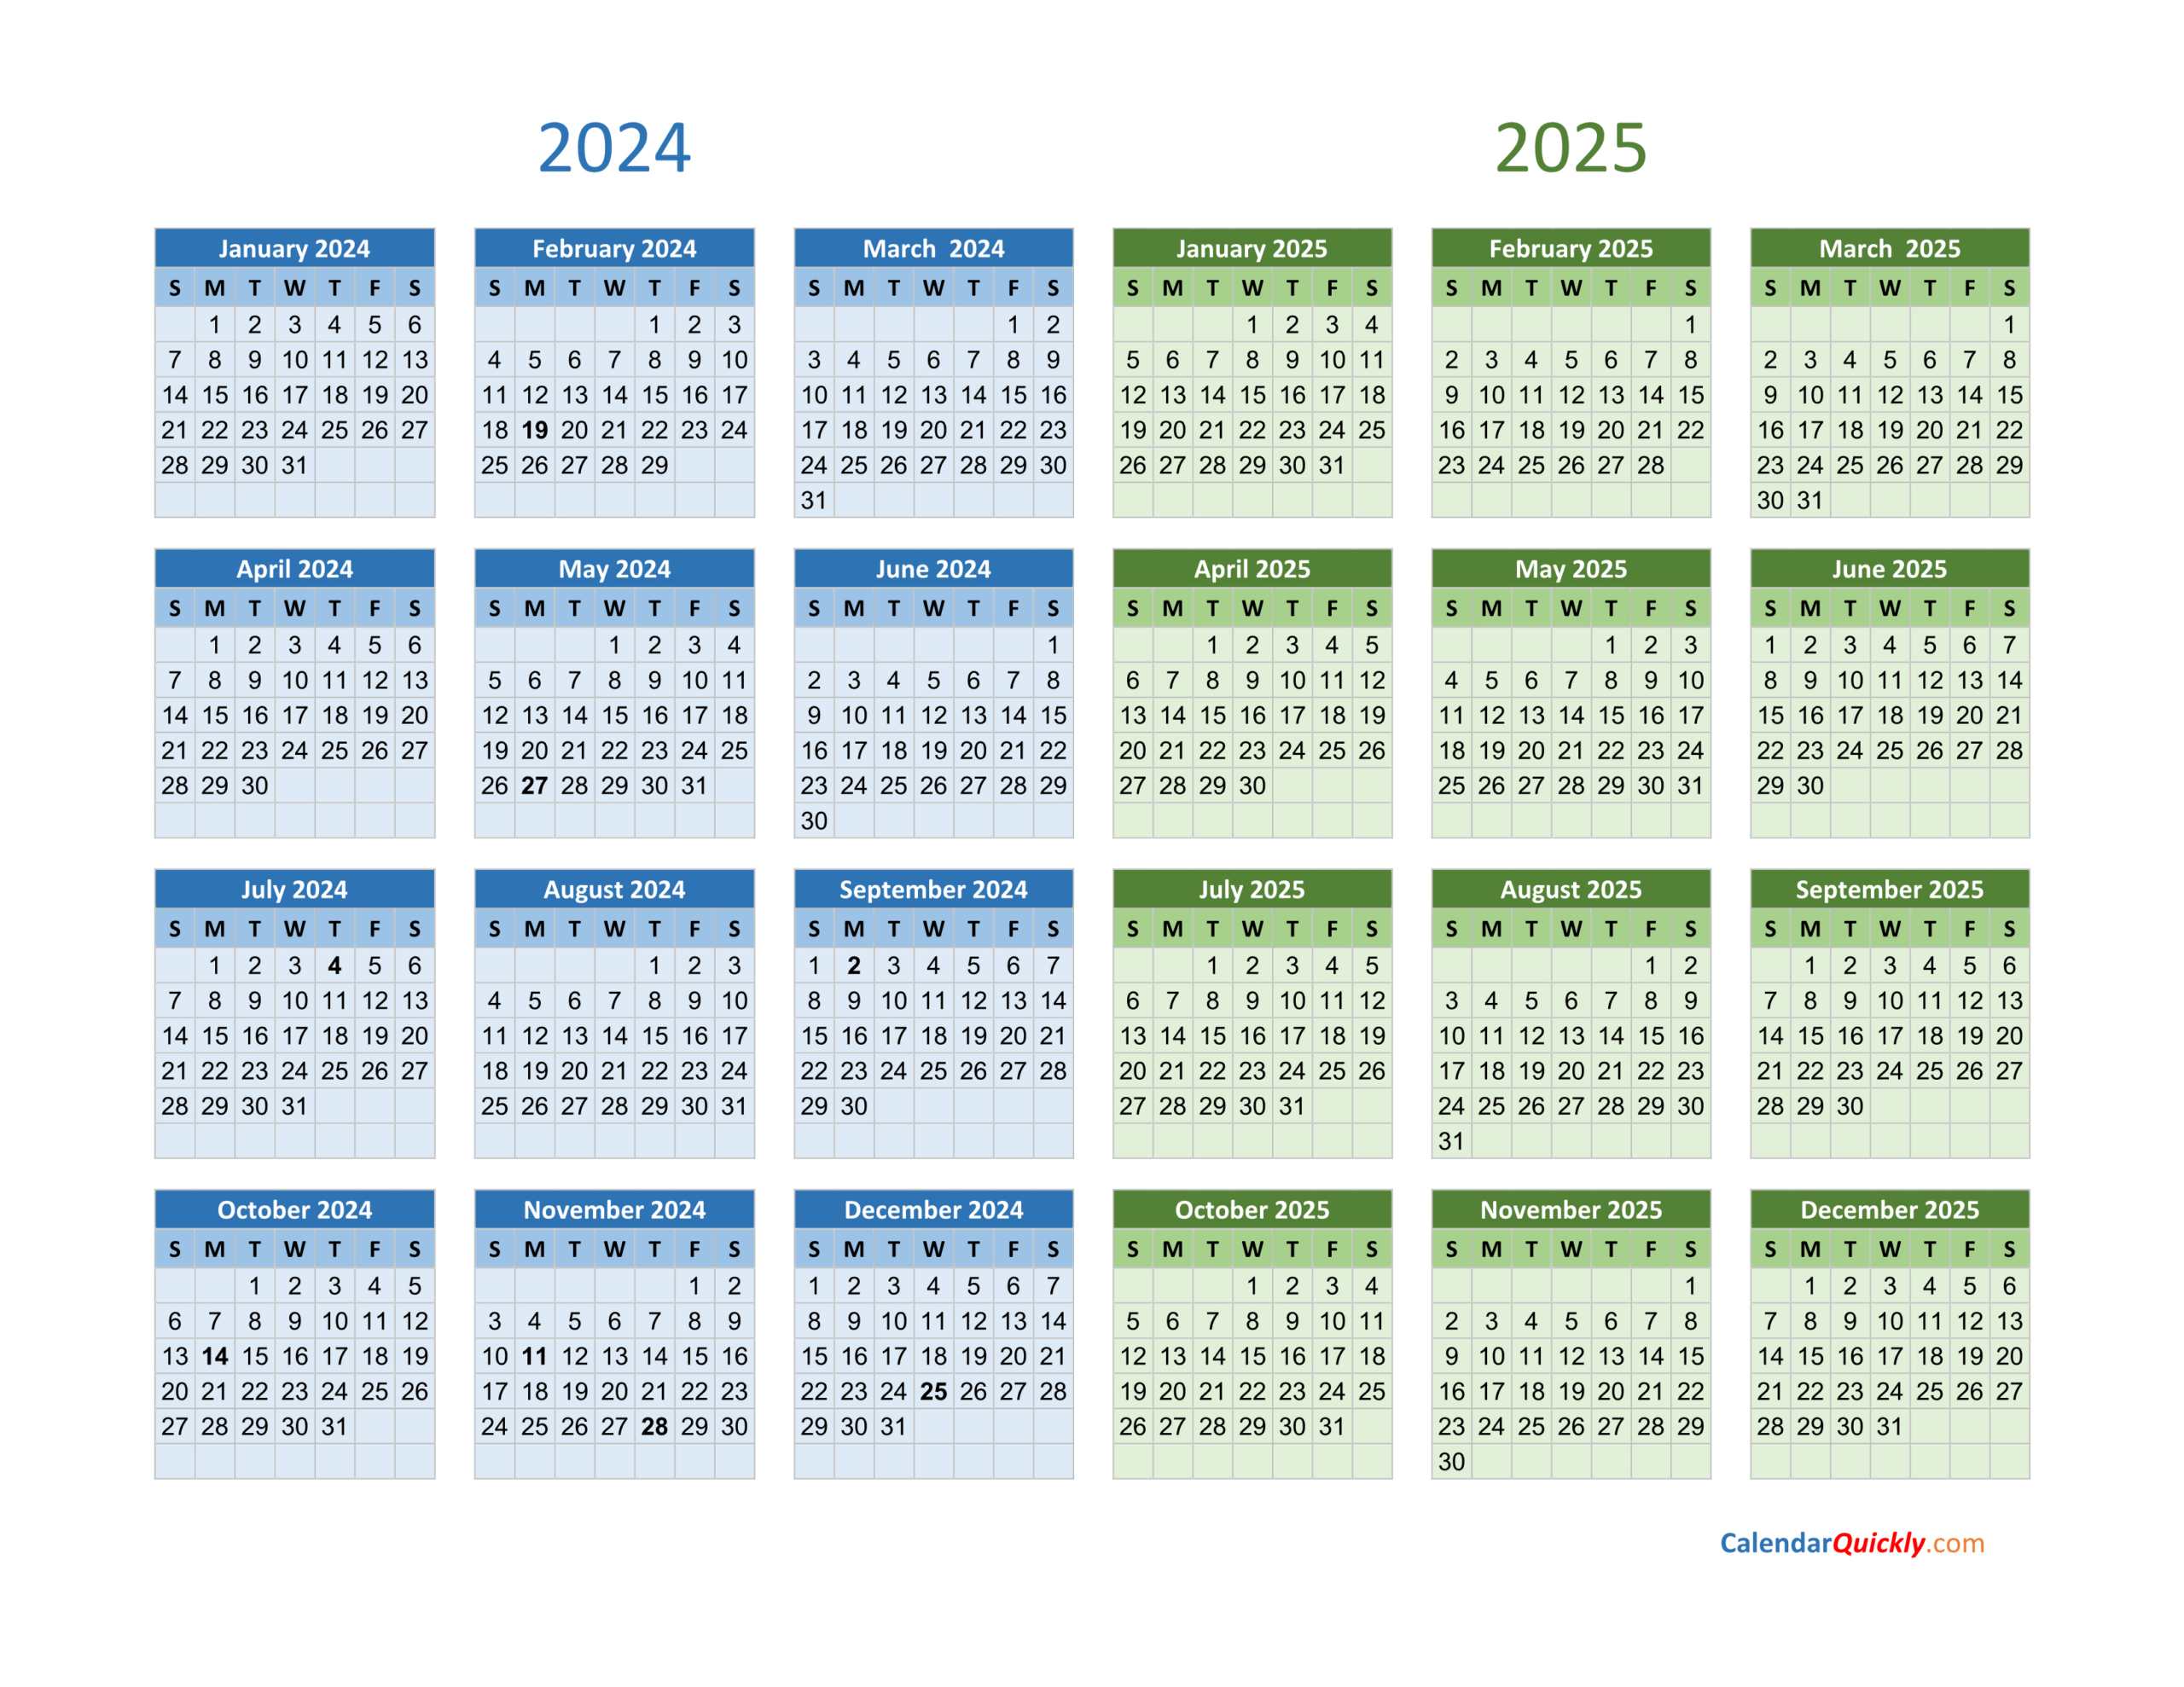 2024 And 2025 Calendar | Calendar Quickly with Free Printable Blank Calendar 2024-2025